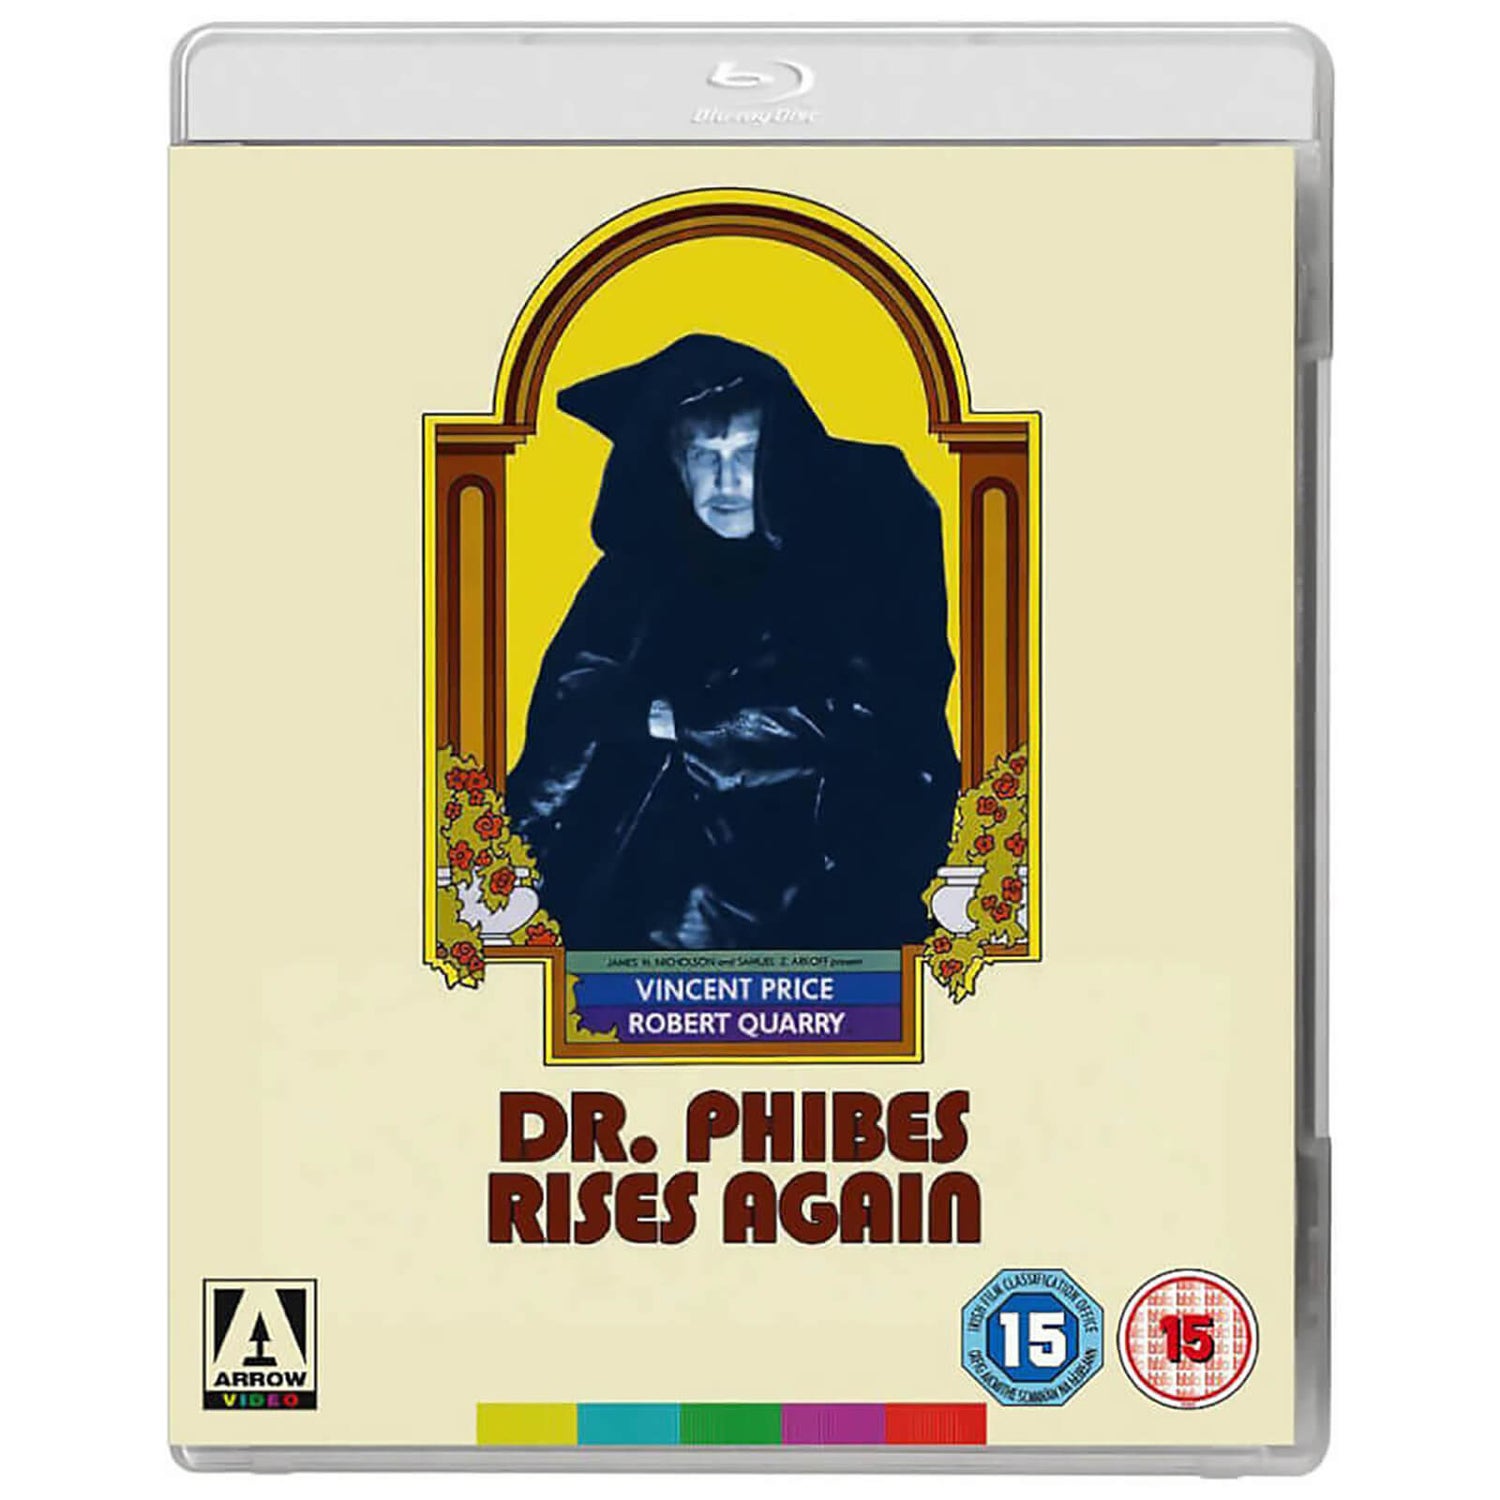 Dr. Phibes Rises Again Blu-ray